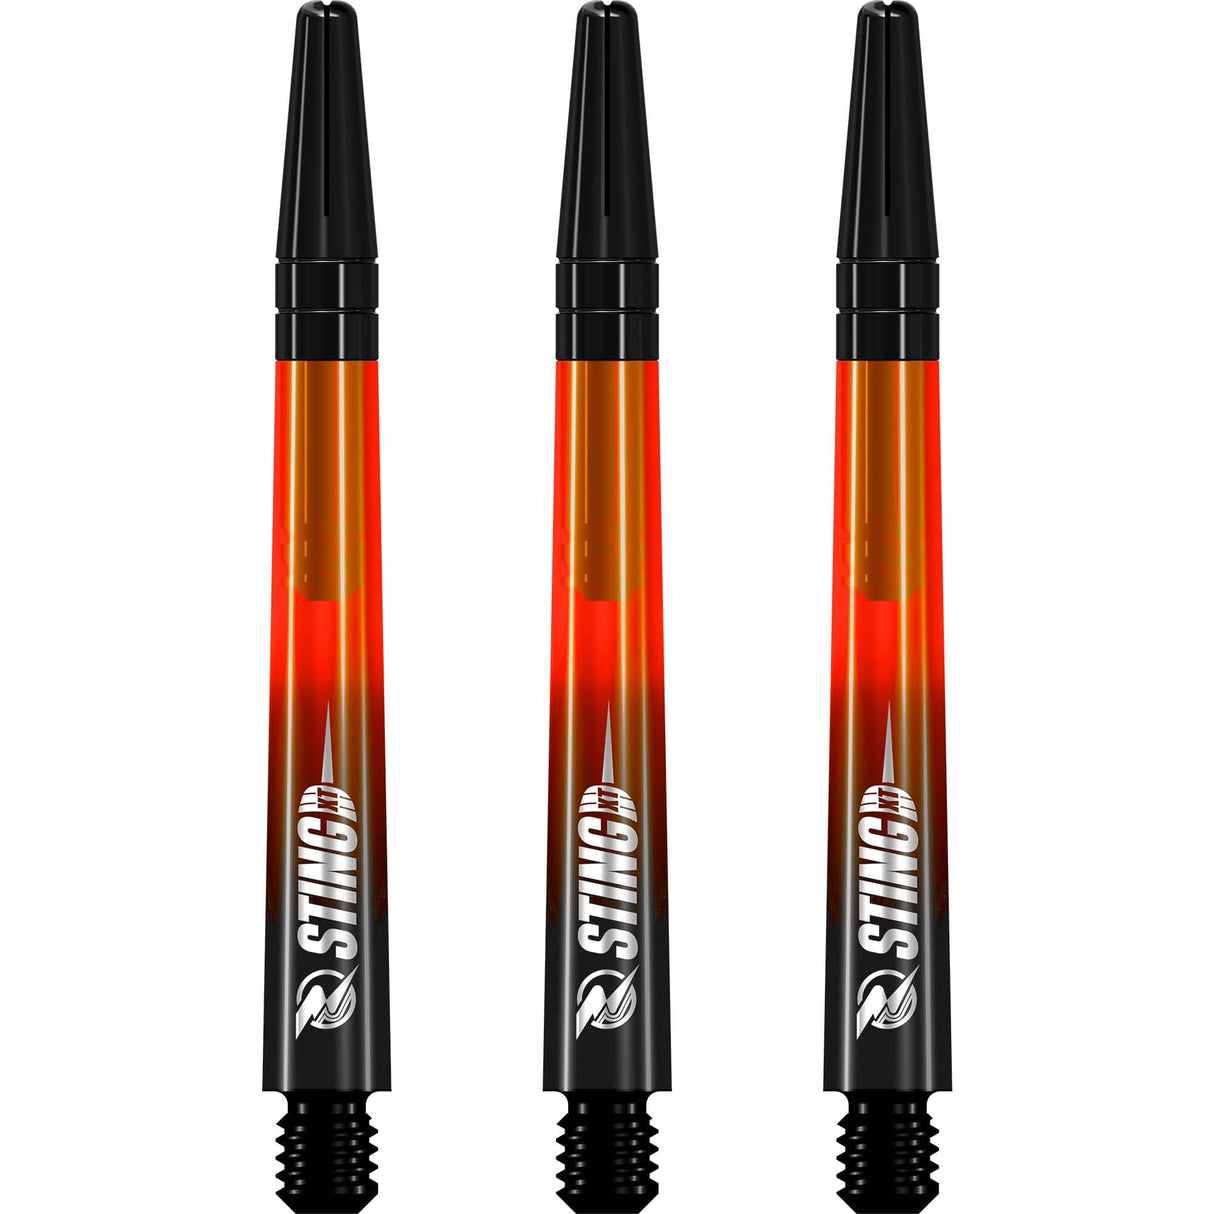 Ruthless Sting XT Dart Shafts - Polycarbonate - Gradient Black & Orange - Black Top Medium